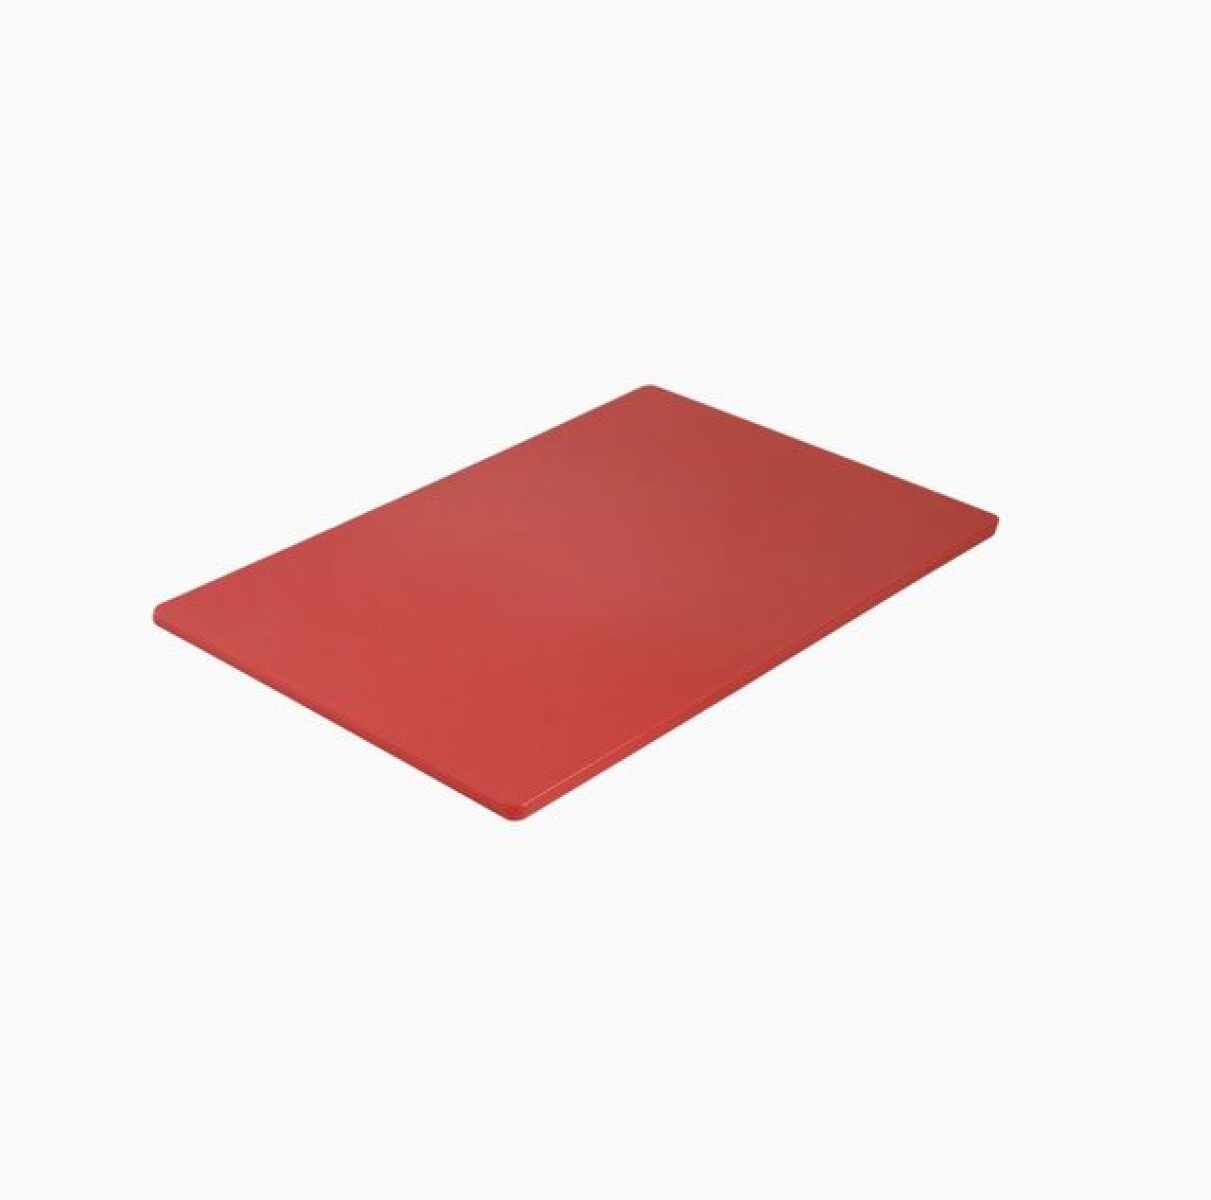 Tabla de corte Roja 30x45x1.3 cm 